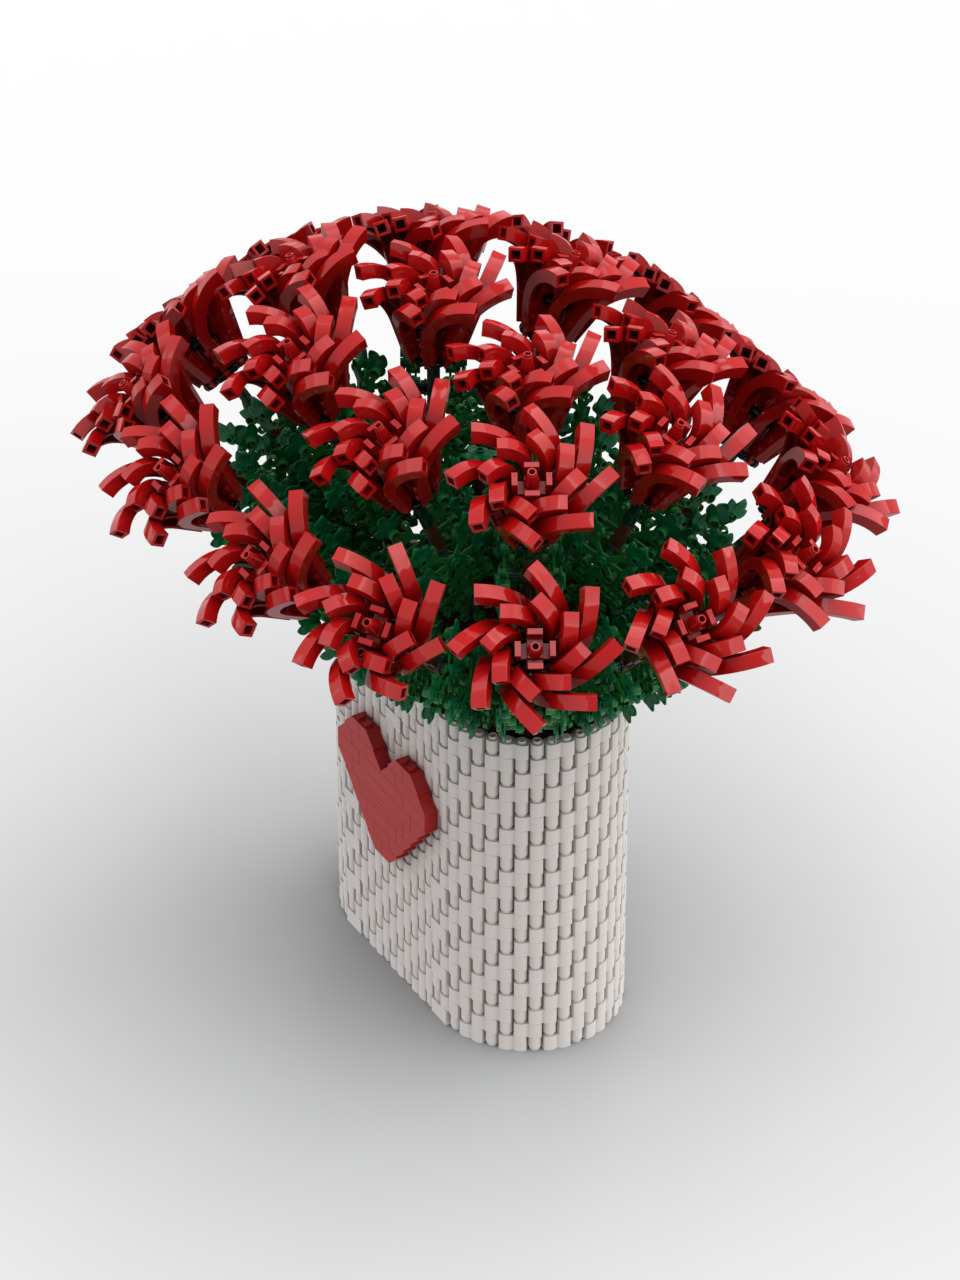 LEGO MOC Two Dozen Red Roses by Ben_Stephenson